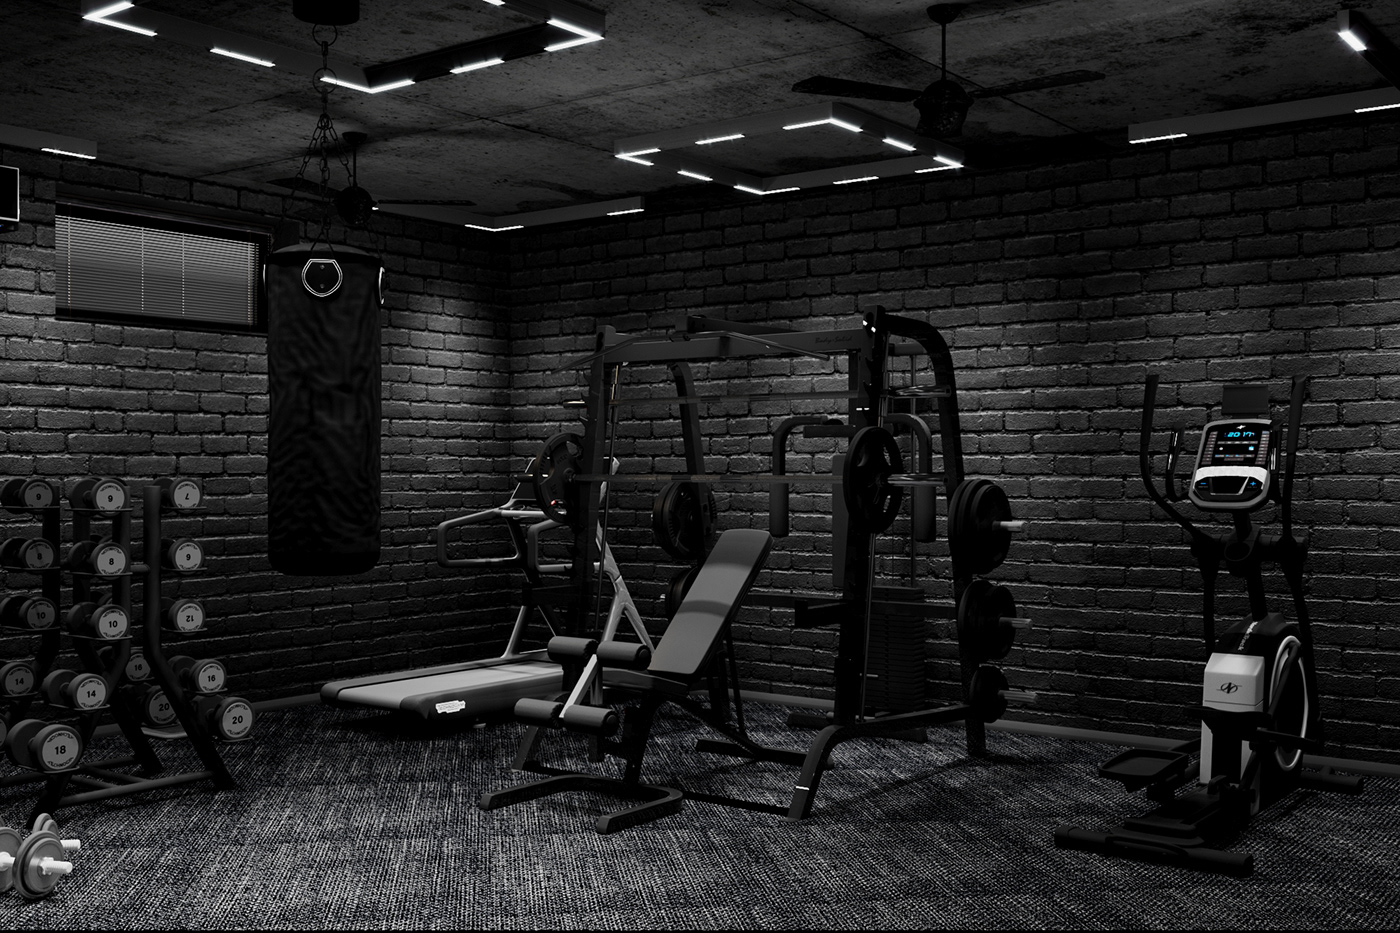 fitness gym Interior sport архитектура визуализация дизайн интерьера интерьер тренажерный зал харьков